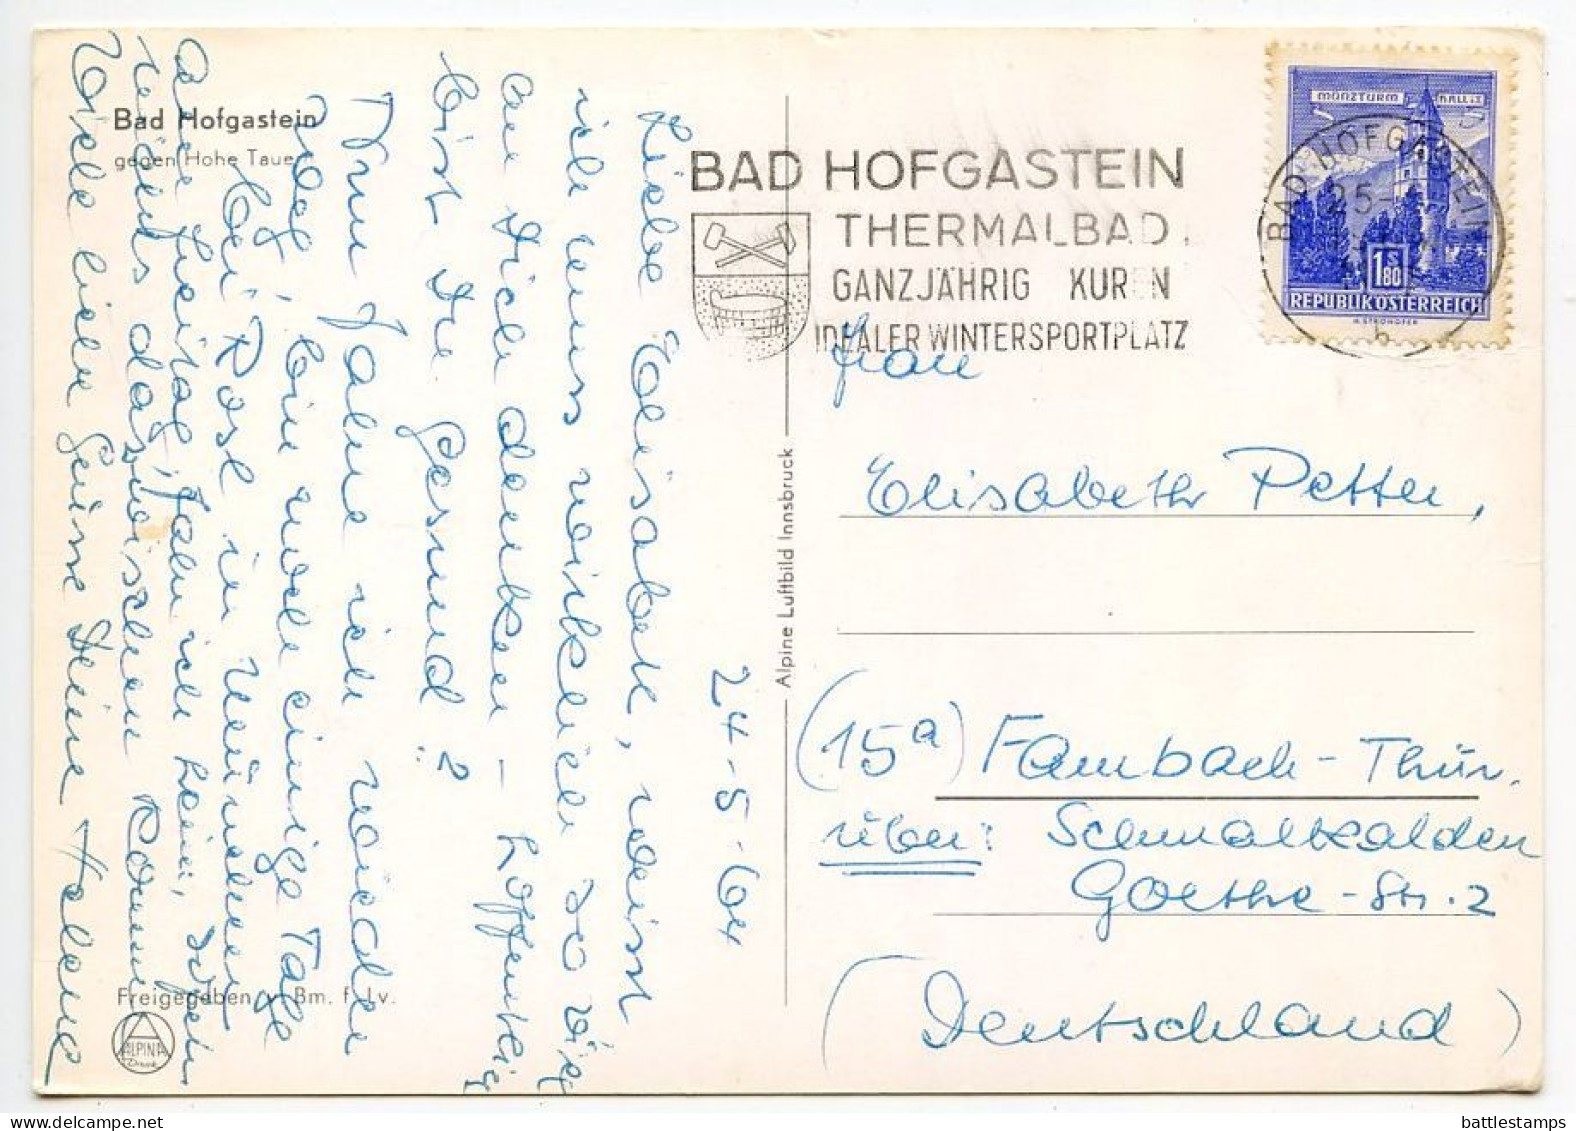 Austria 1964 Postcard Bad Hofgastein - Panoramic View; 1.80s The Mint, Hall, Tyrol Stamp; Slogan Cancel - Bad Hofgastein